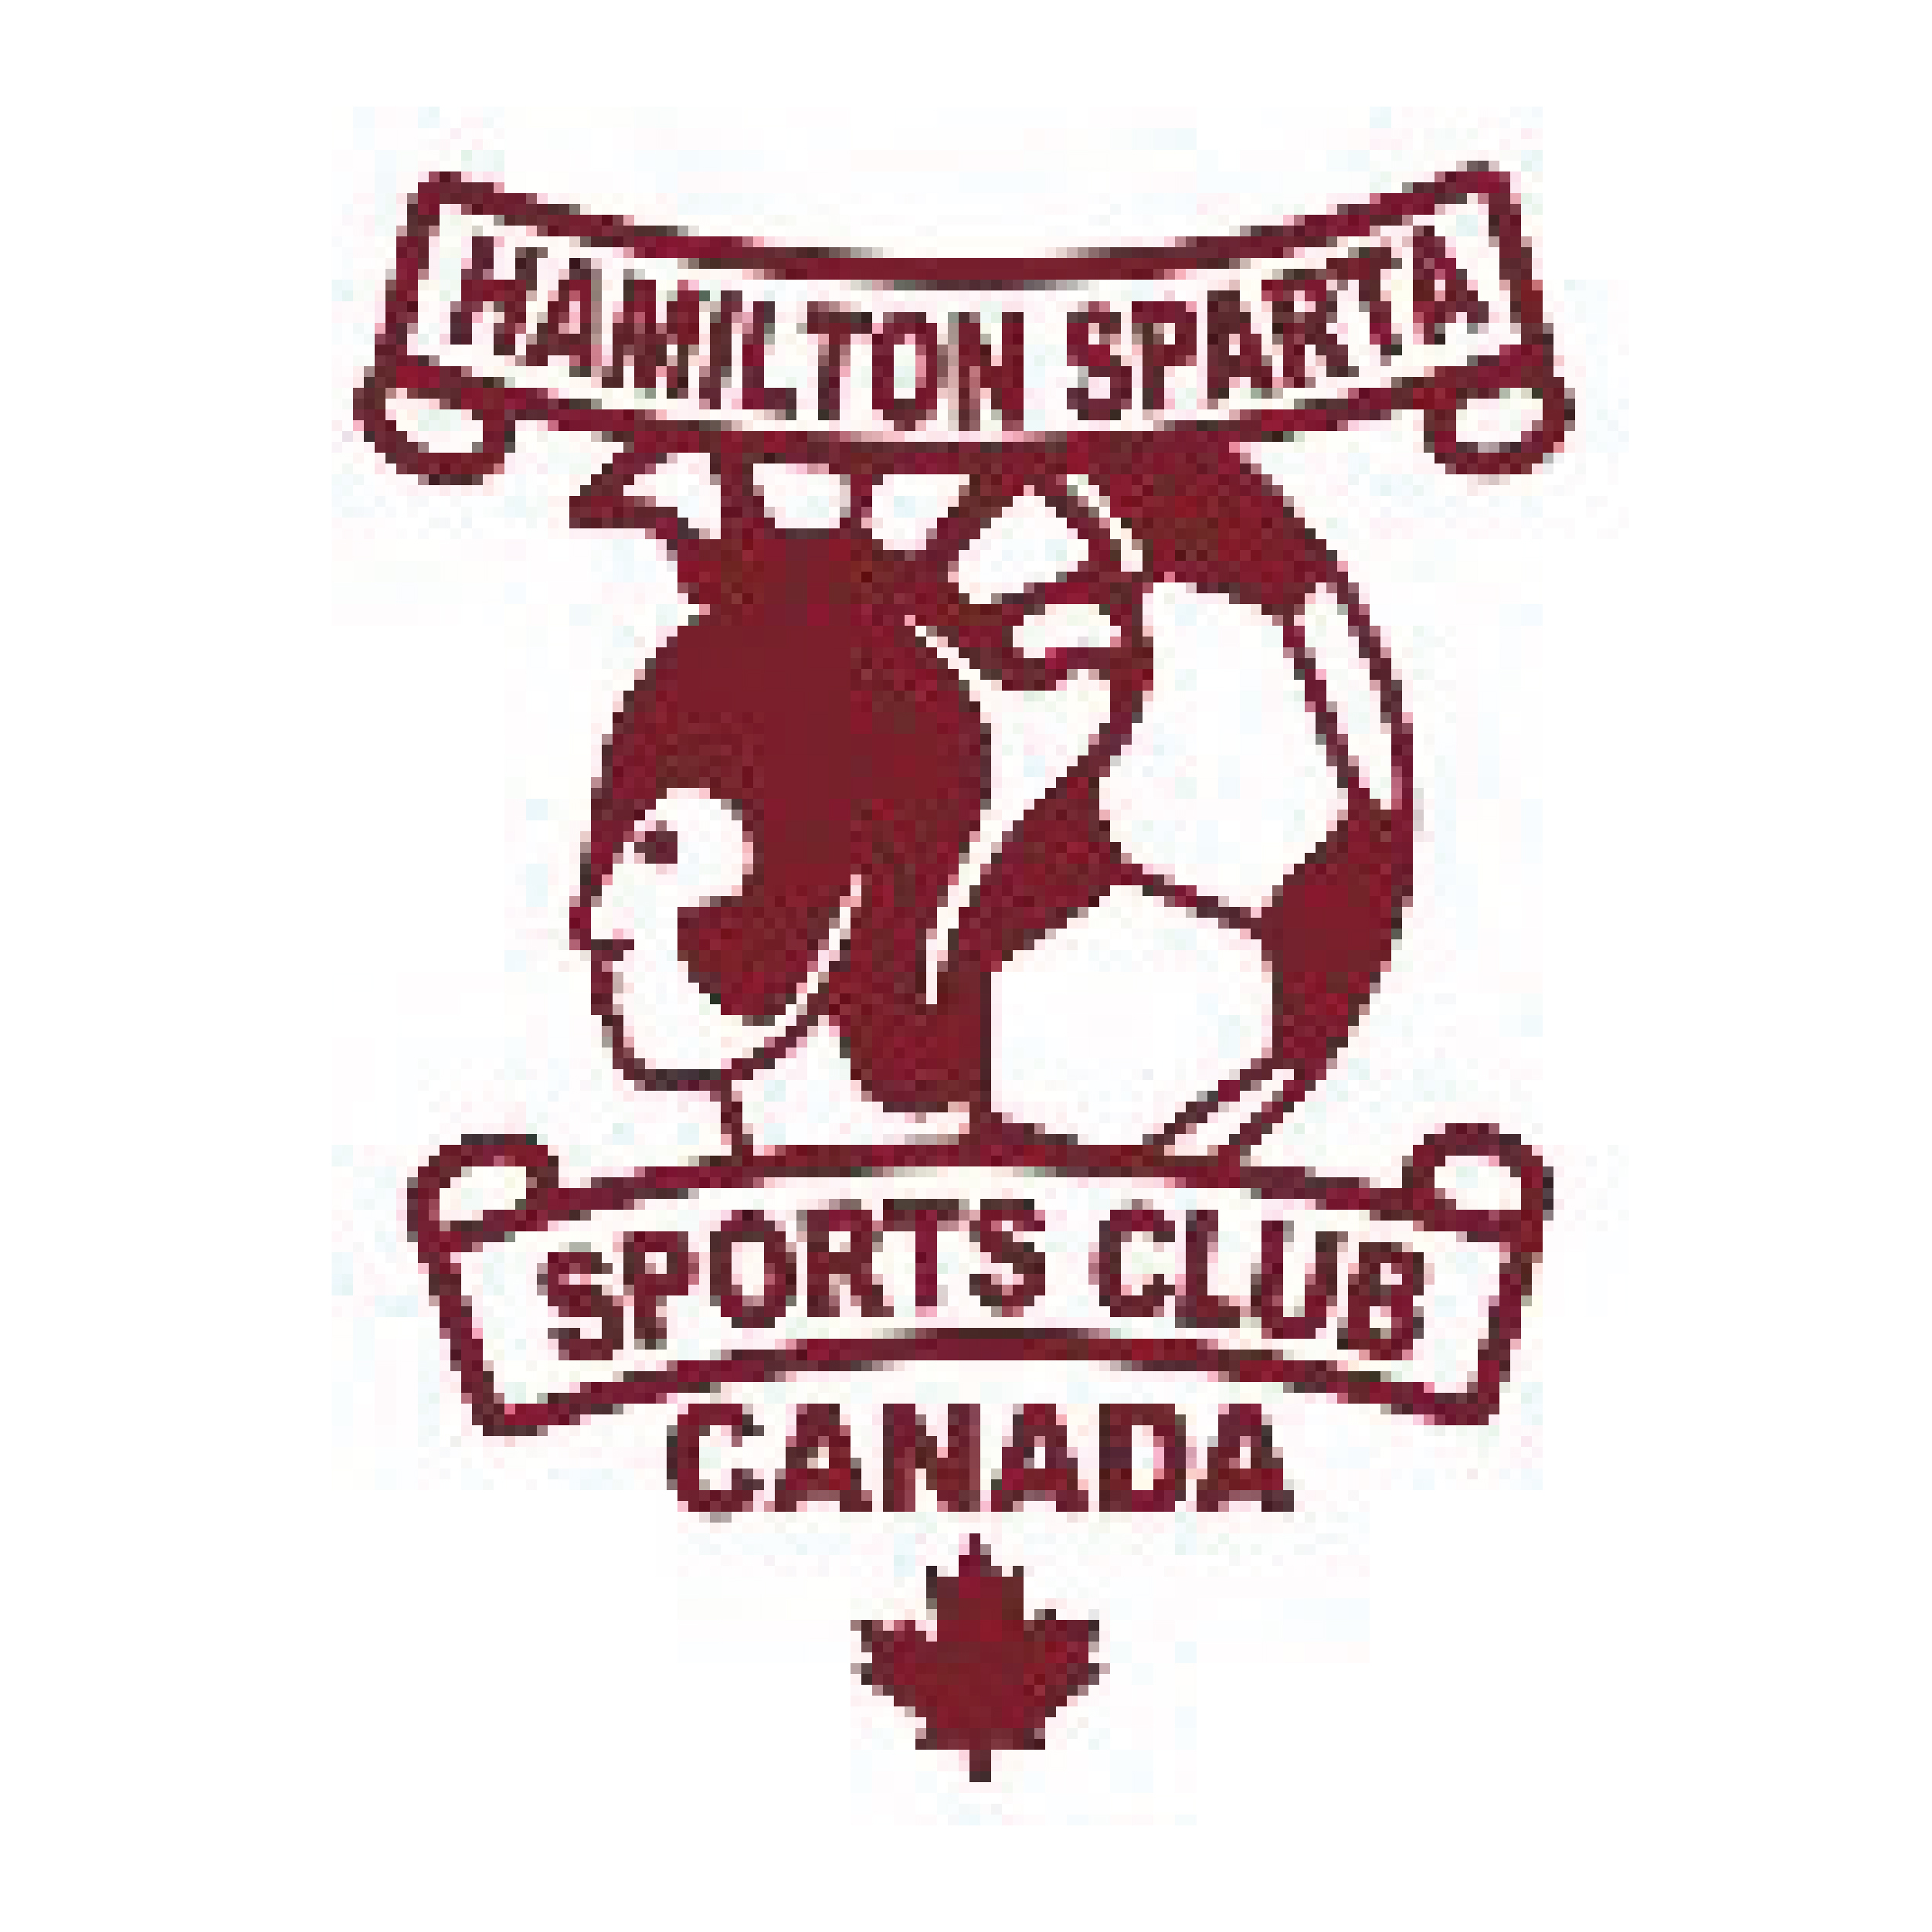 Hamilton Sparta Soccer Club